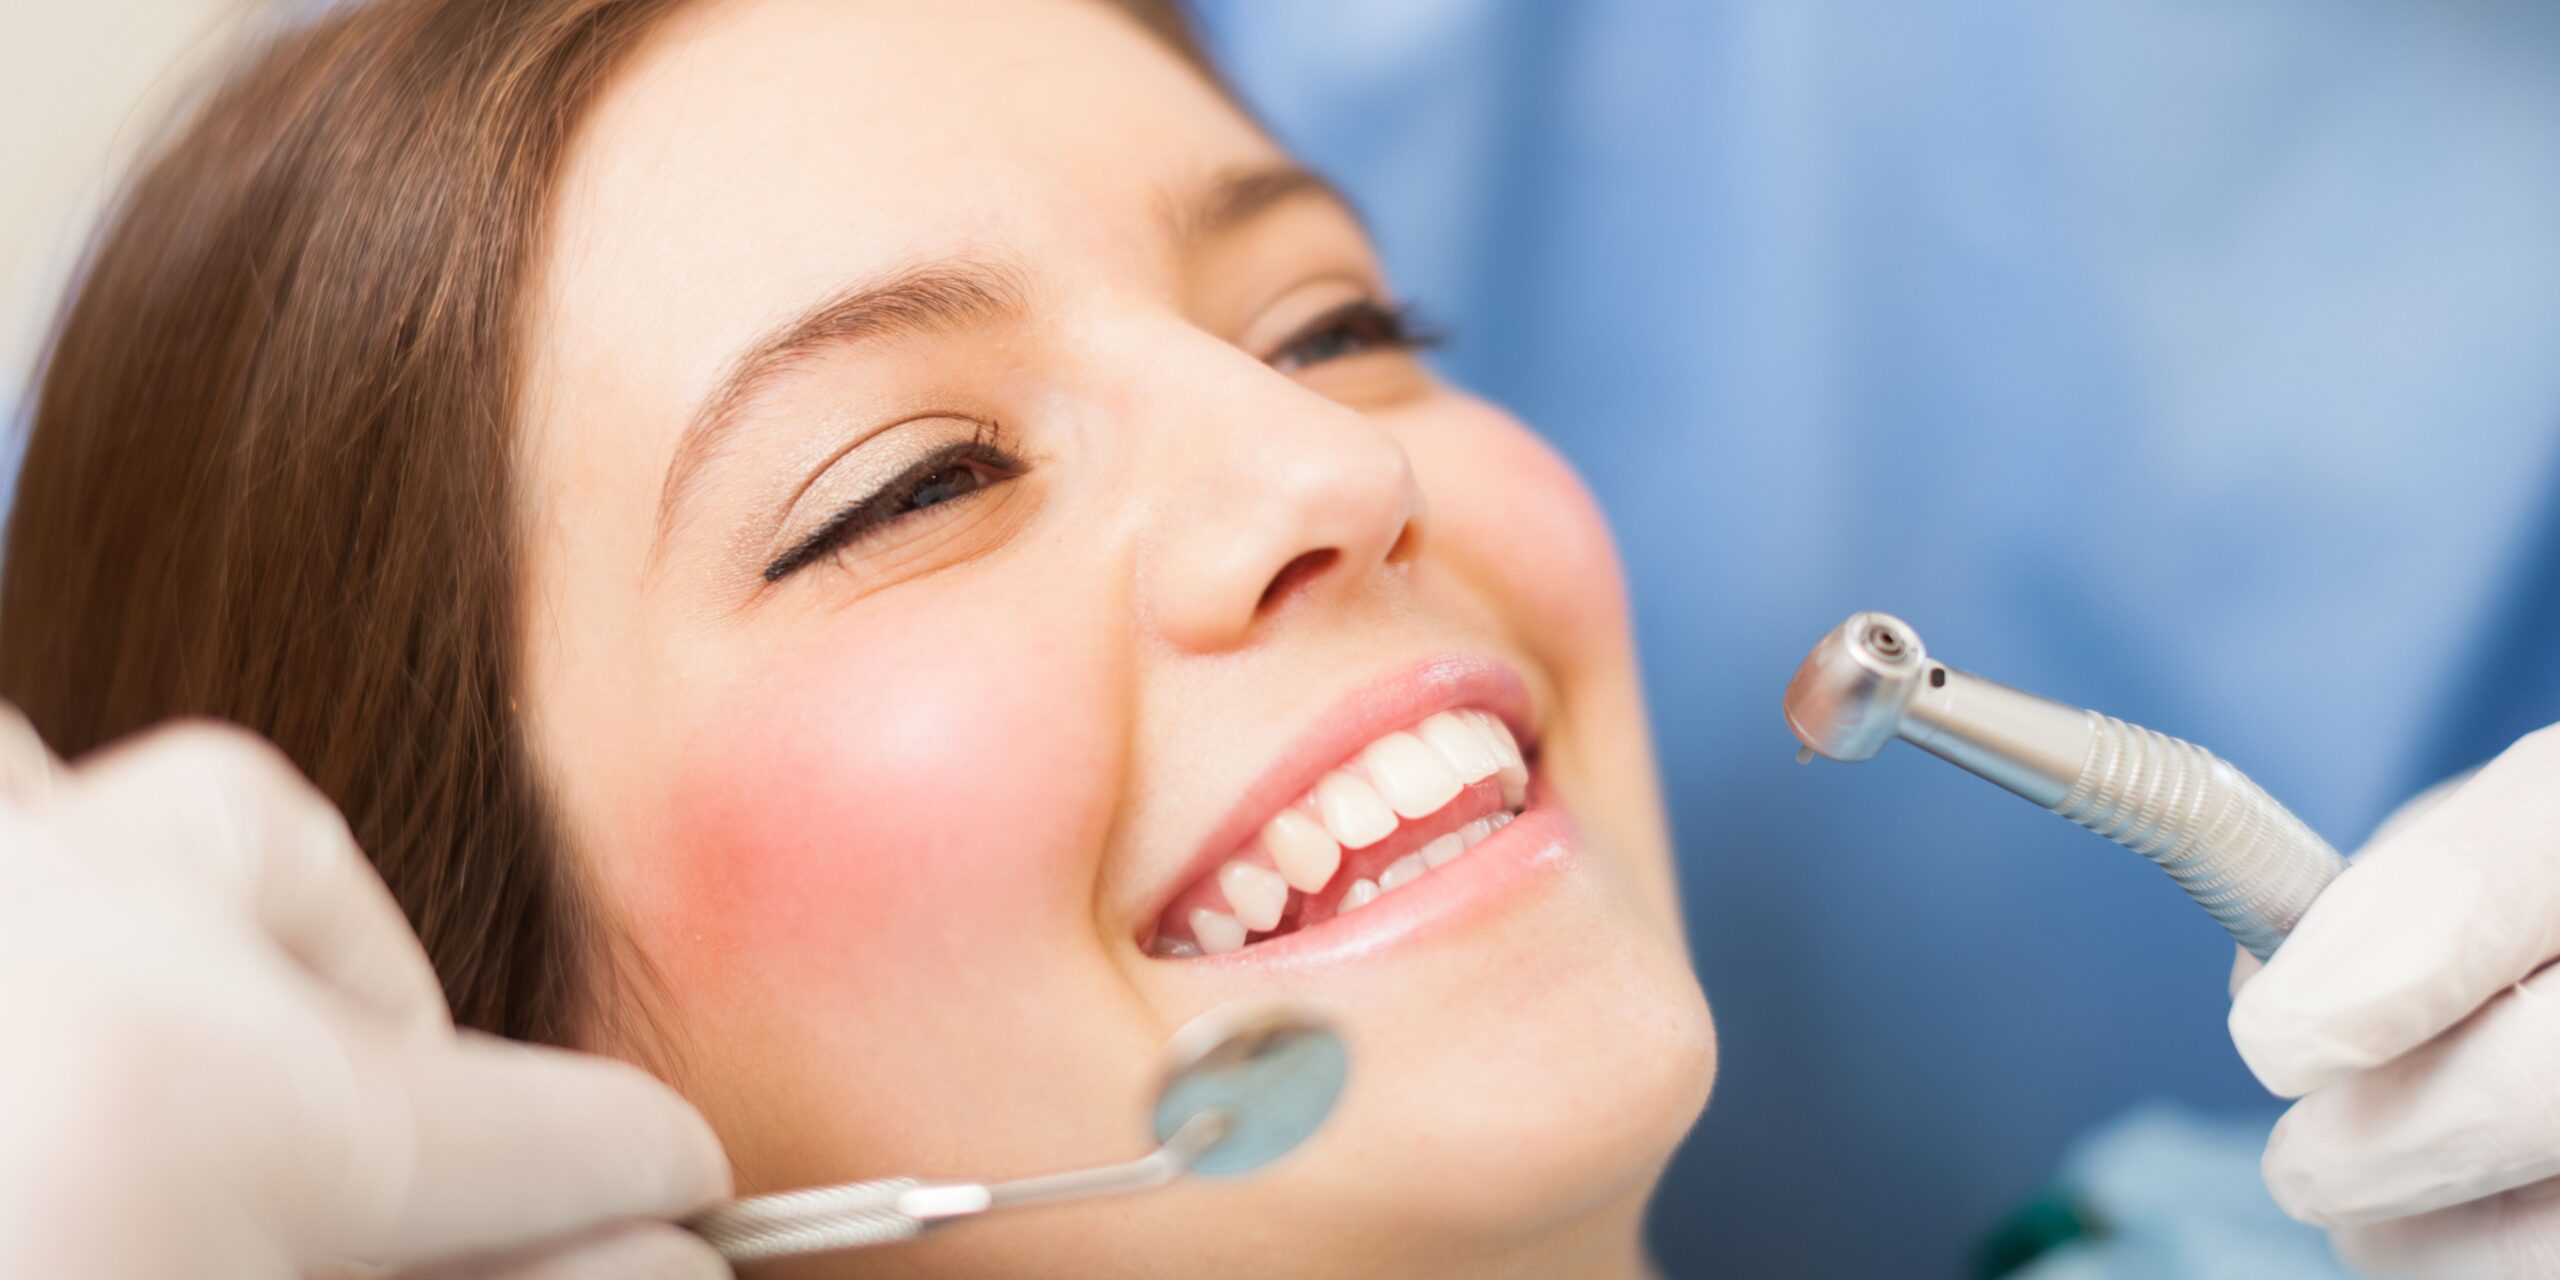 limpieza dental profesional